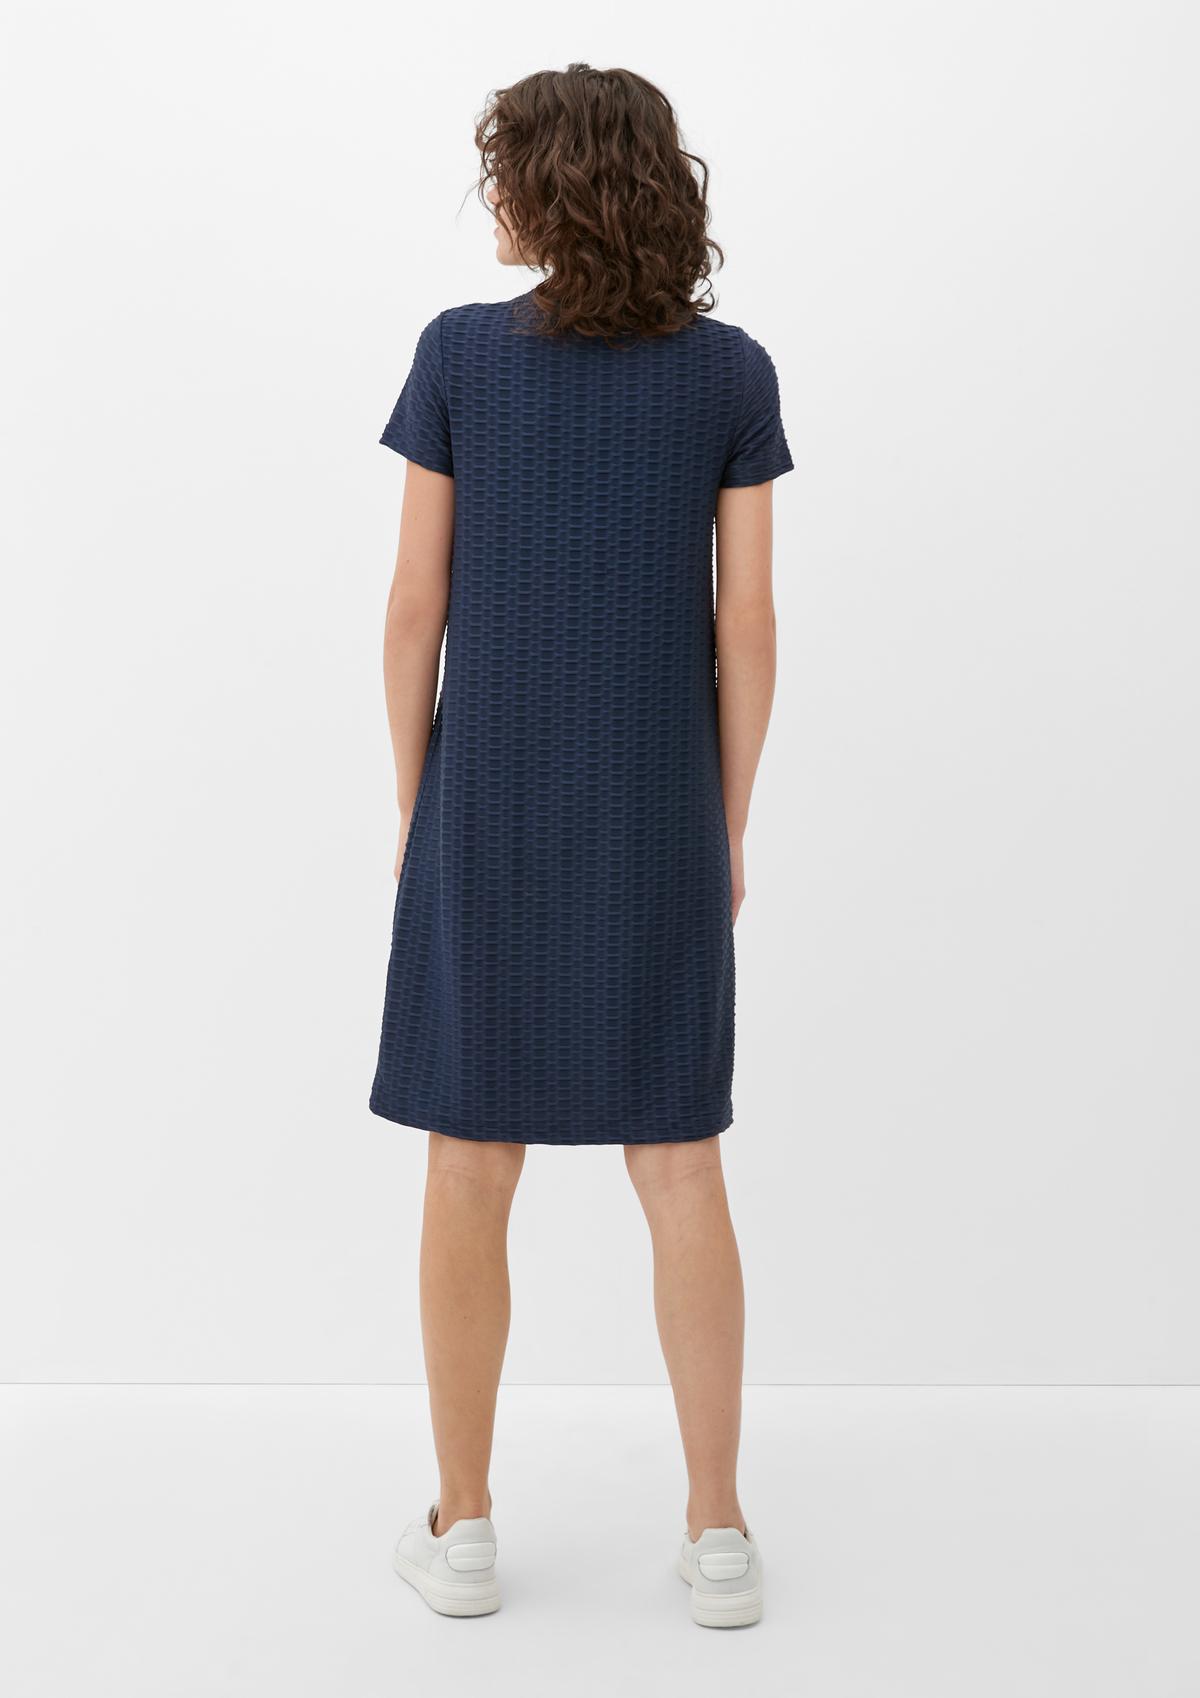 Shirt dress with a textured pattern - navy